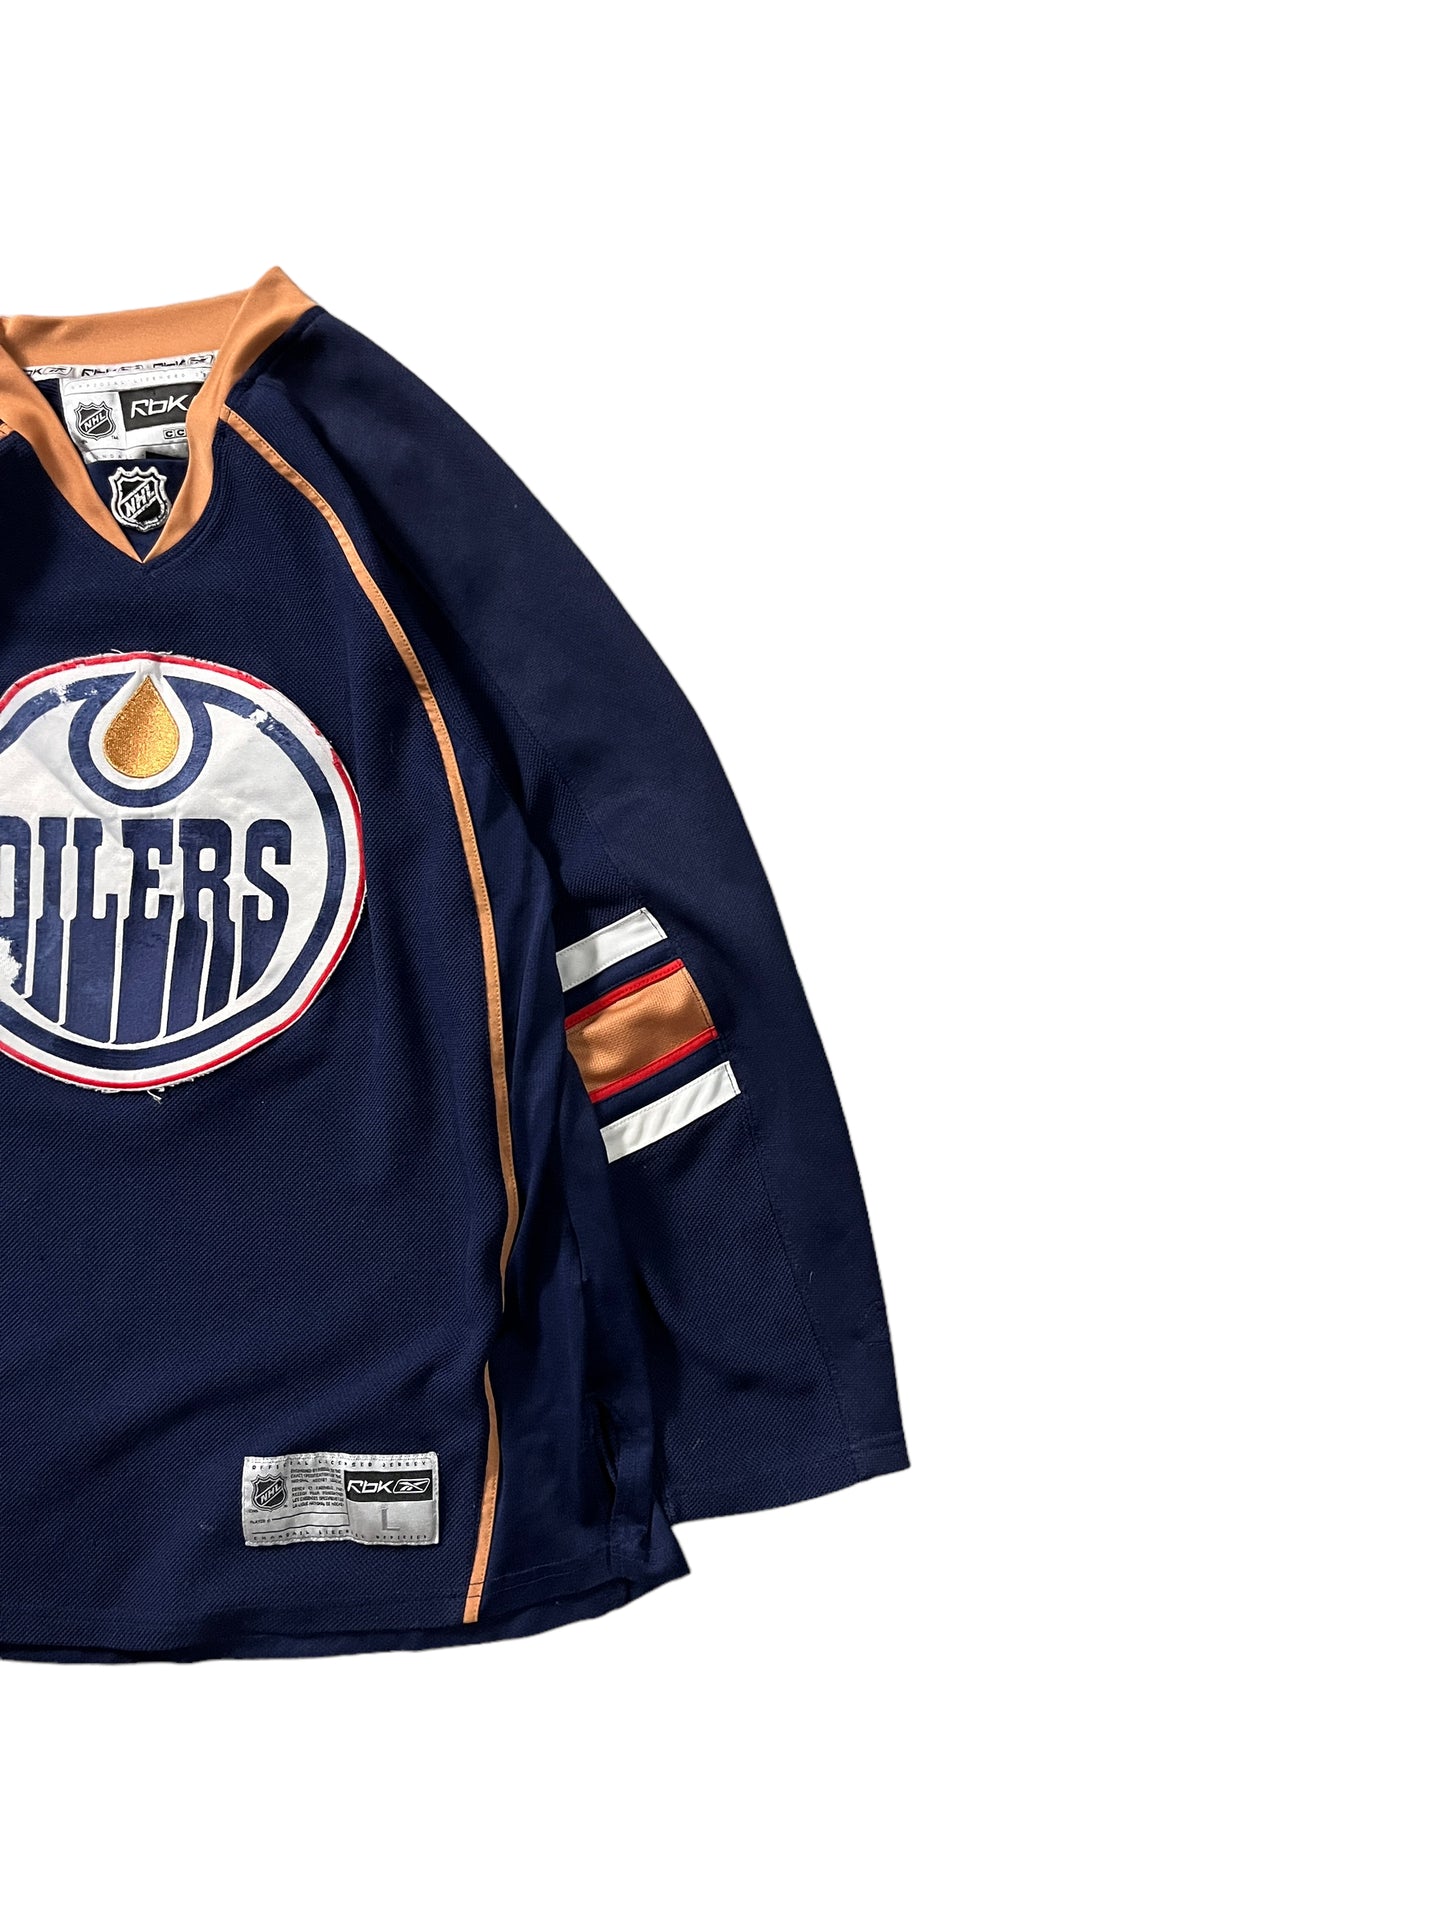 Official NHL CCM Edmonton Oilers Jersey